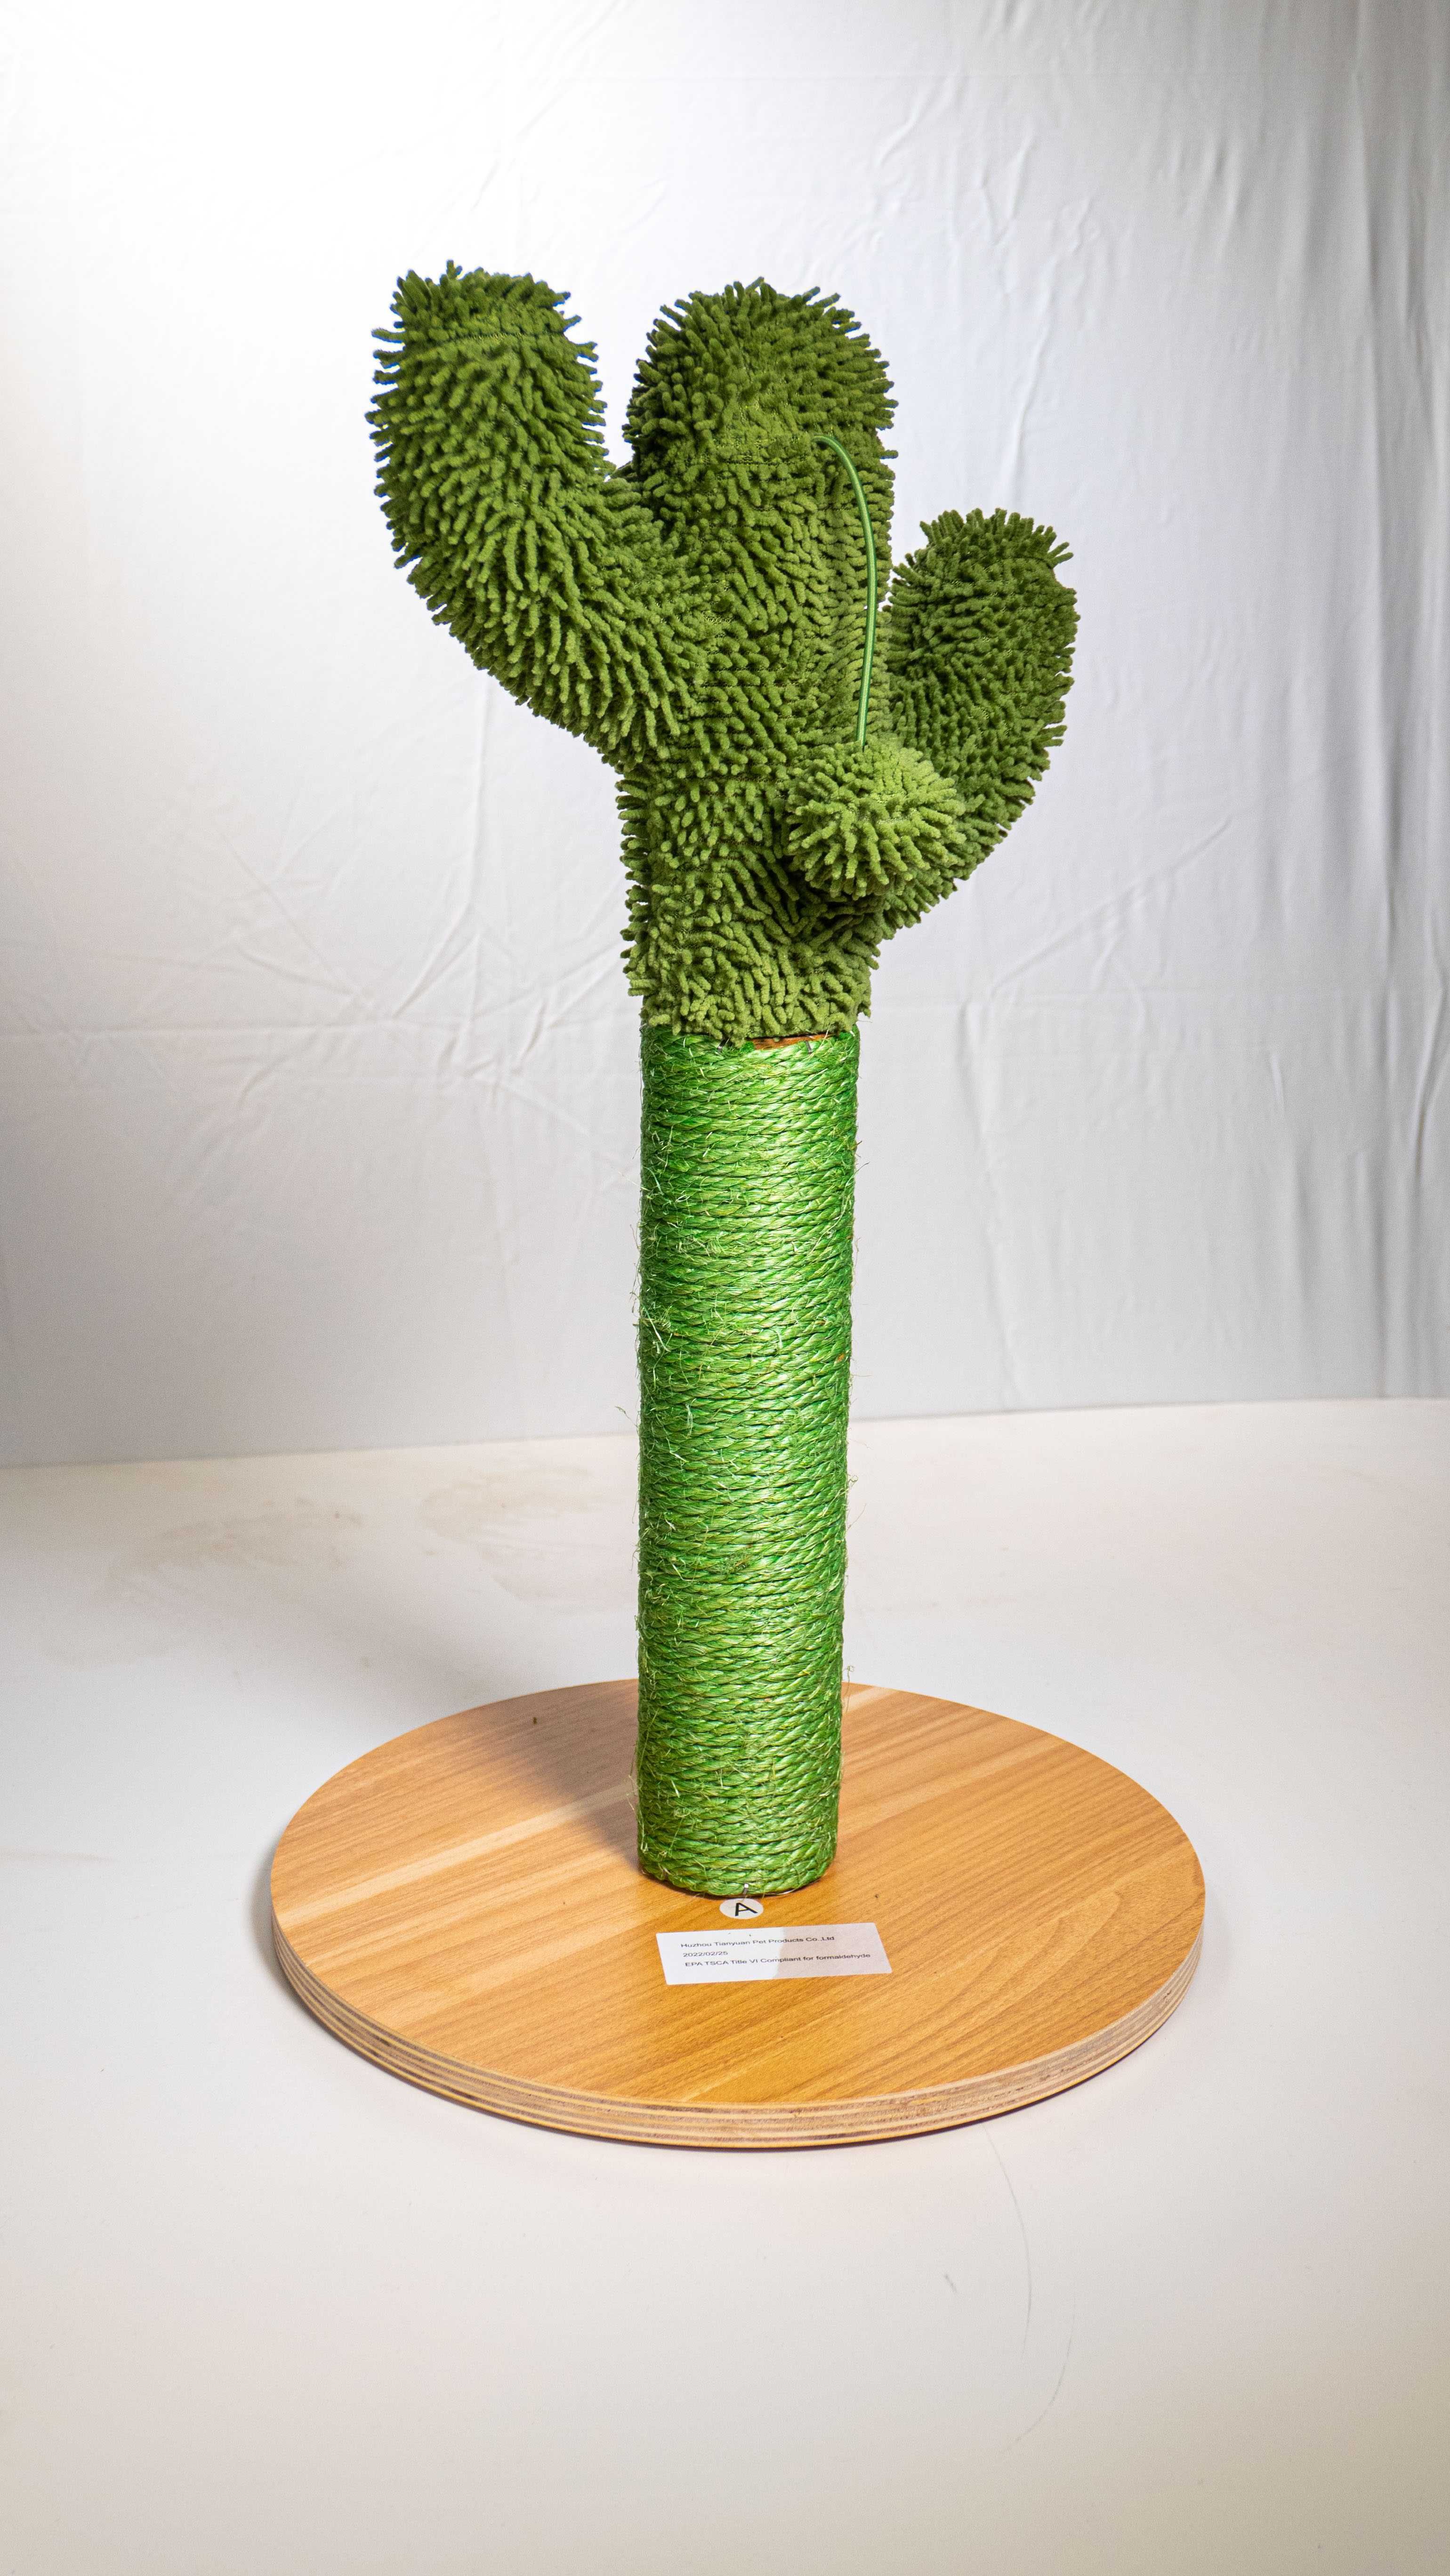 Котгтеточка в форме кактуса